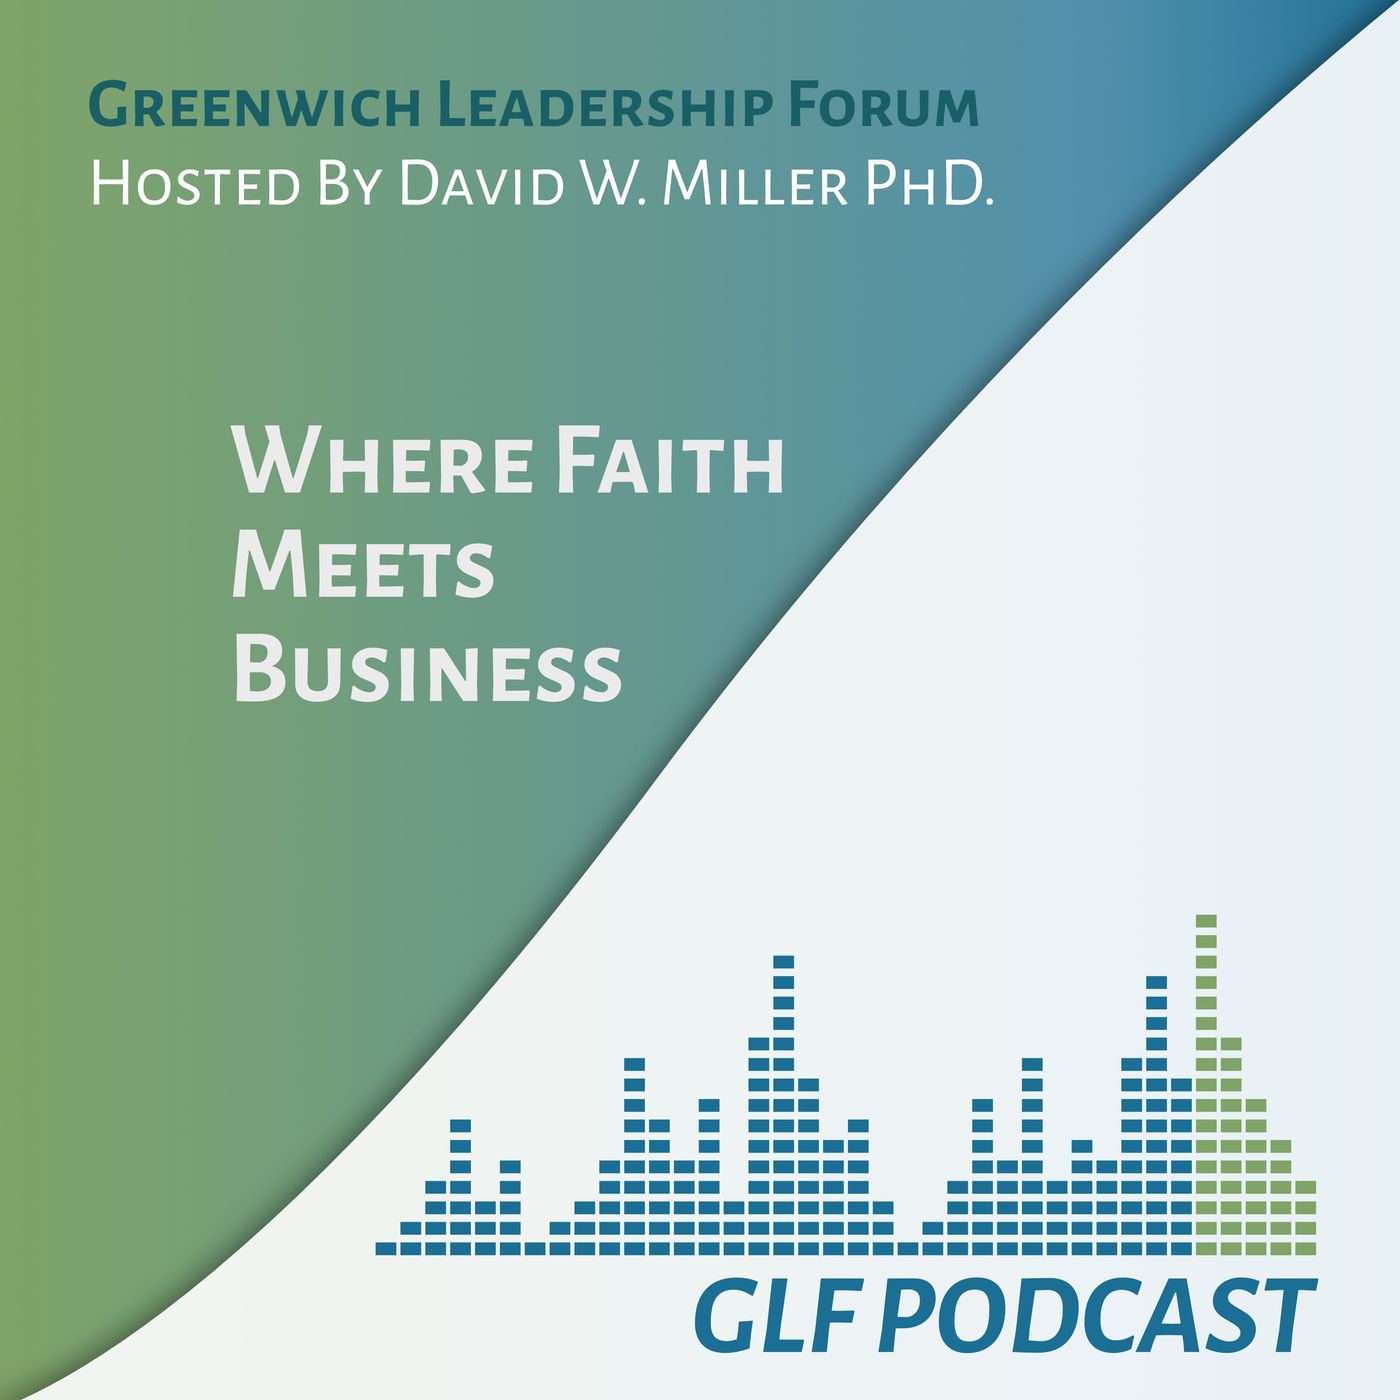 Greenwich Leadership Forum